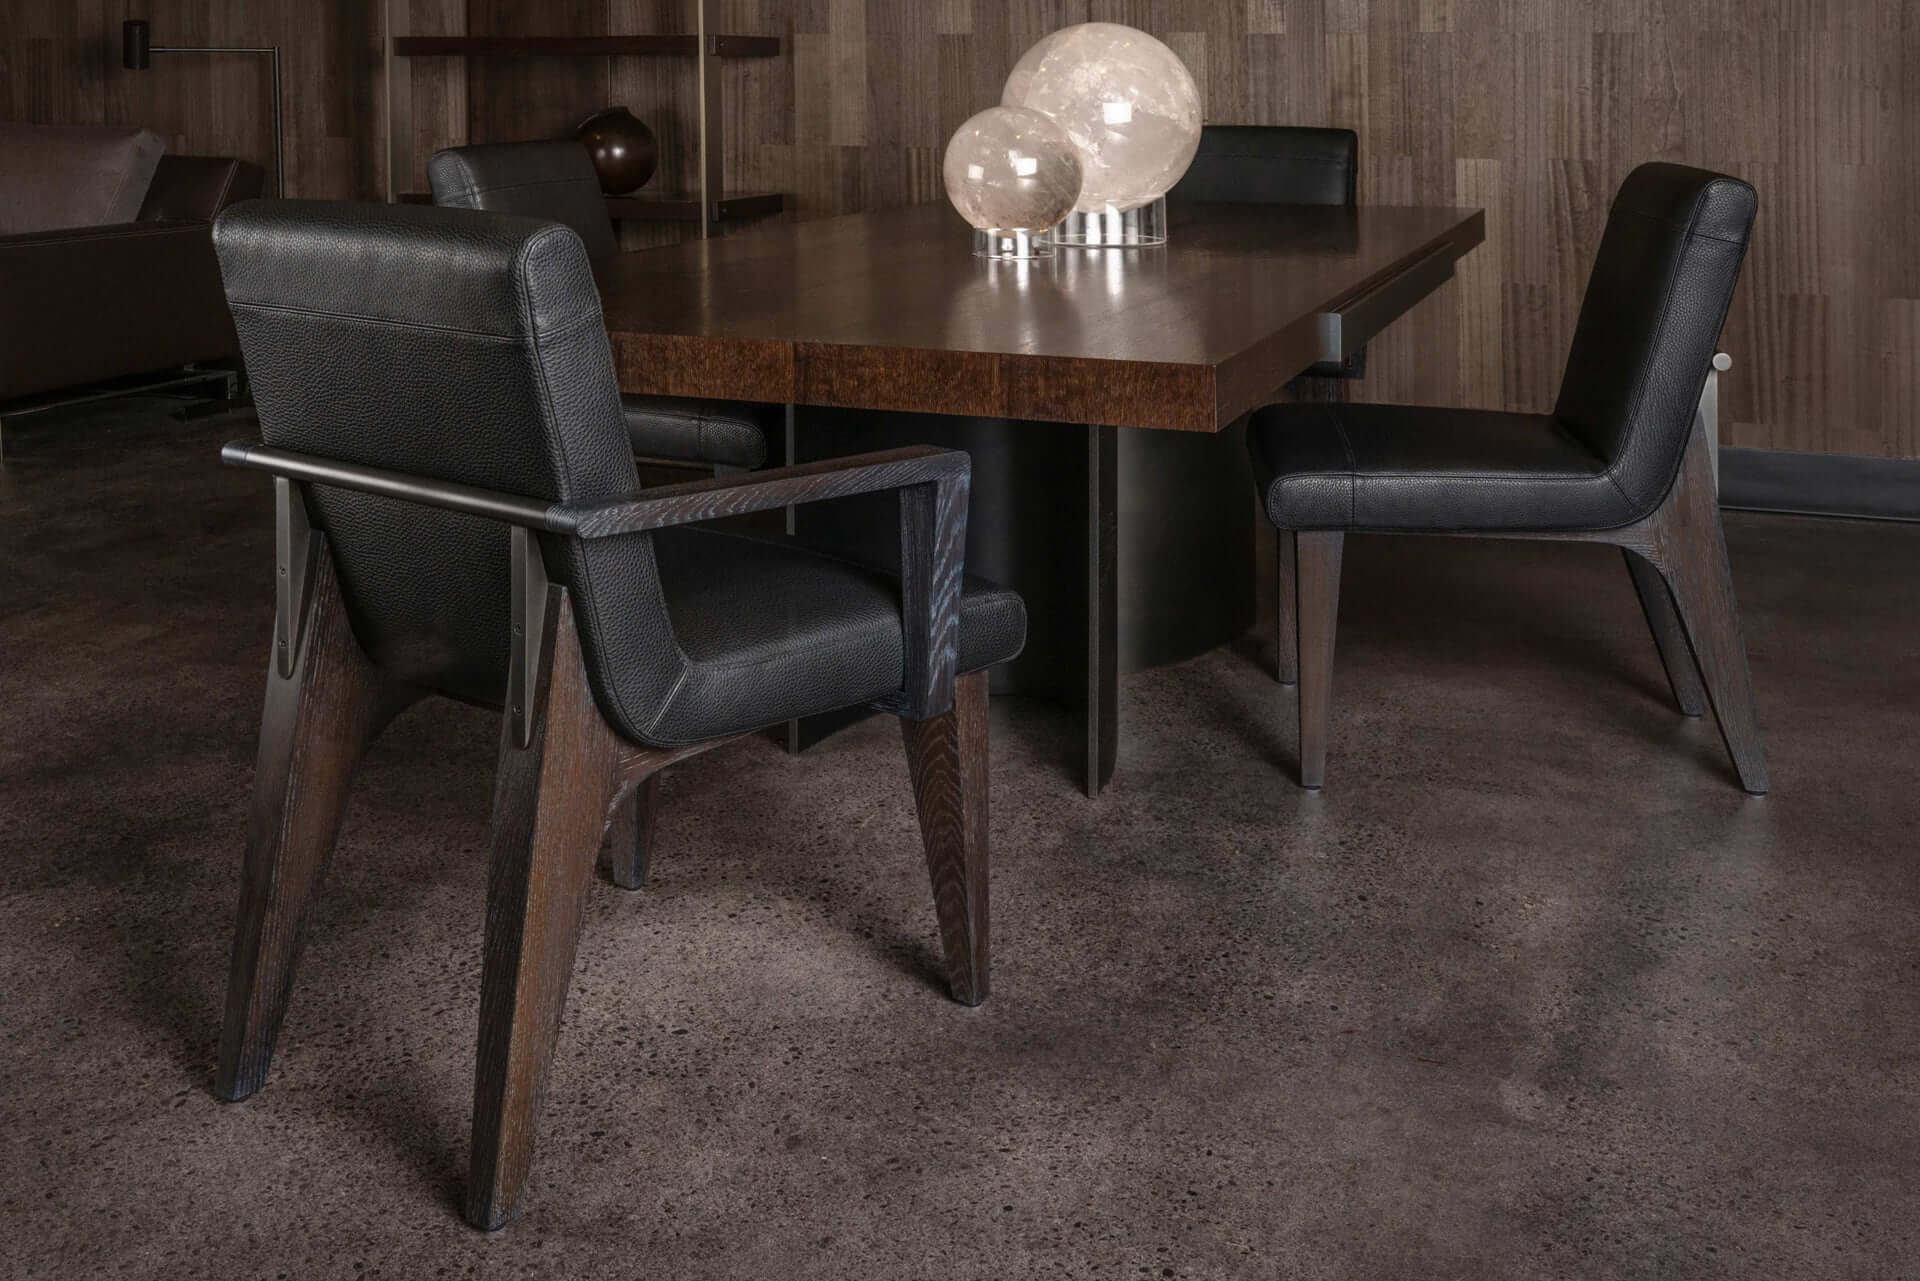 Modern custom furniture in the dining area made by Luma Design Workshop